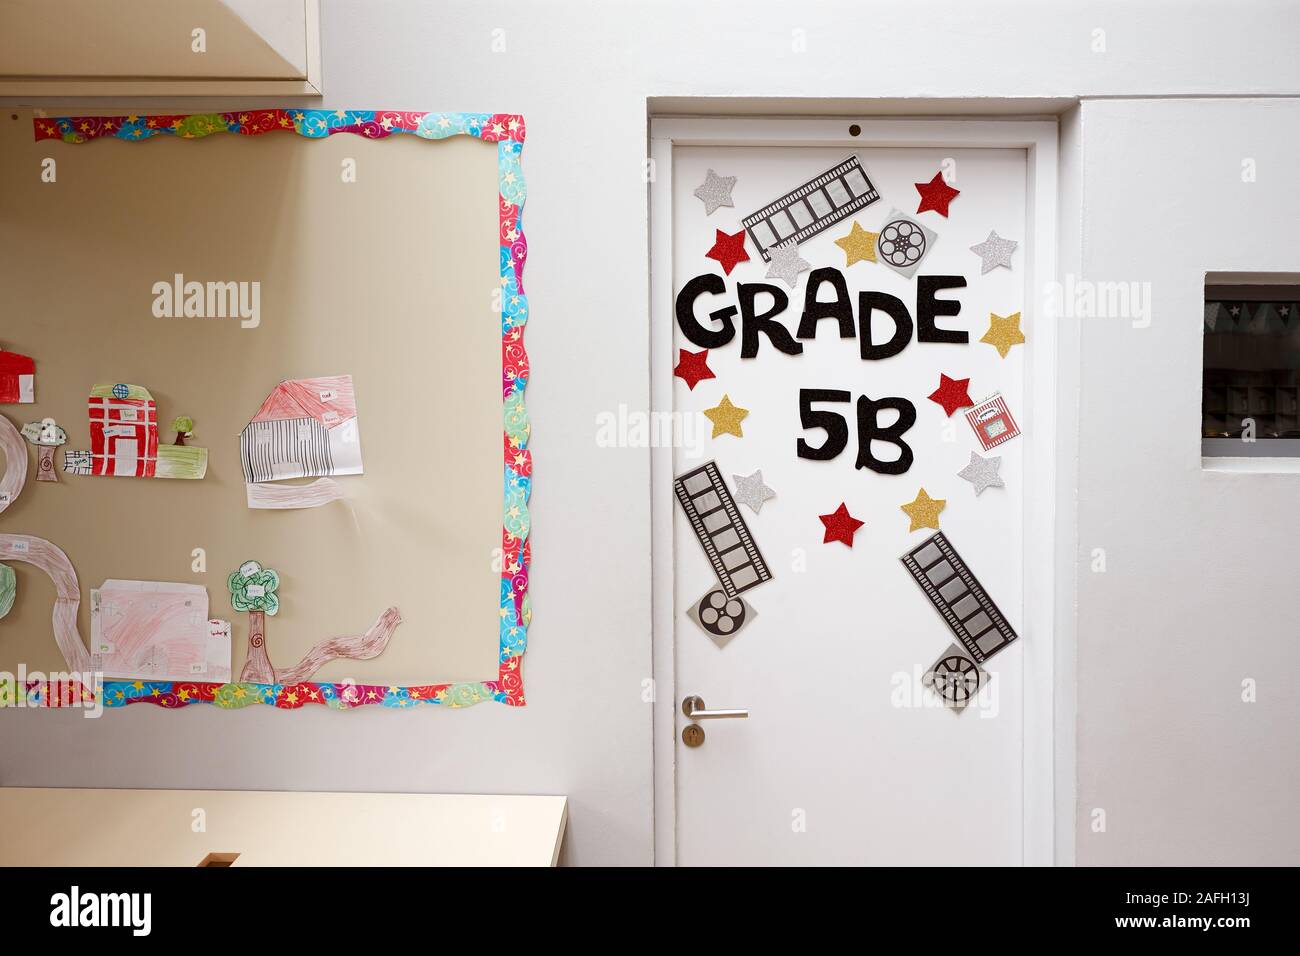 Door To Elementary School Classroom With Display Board Stock Photo